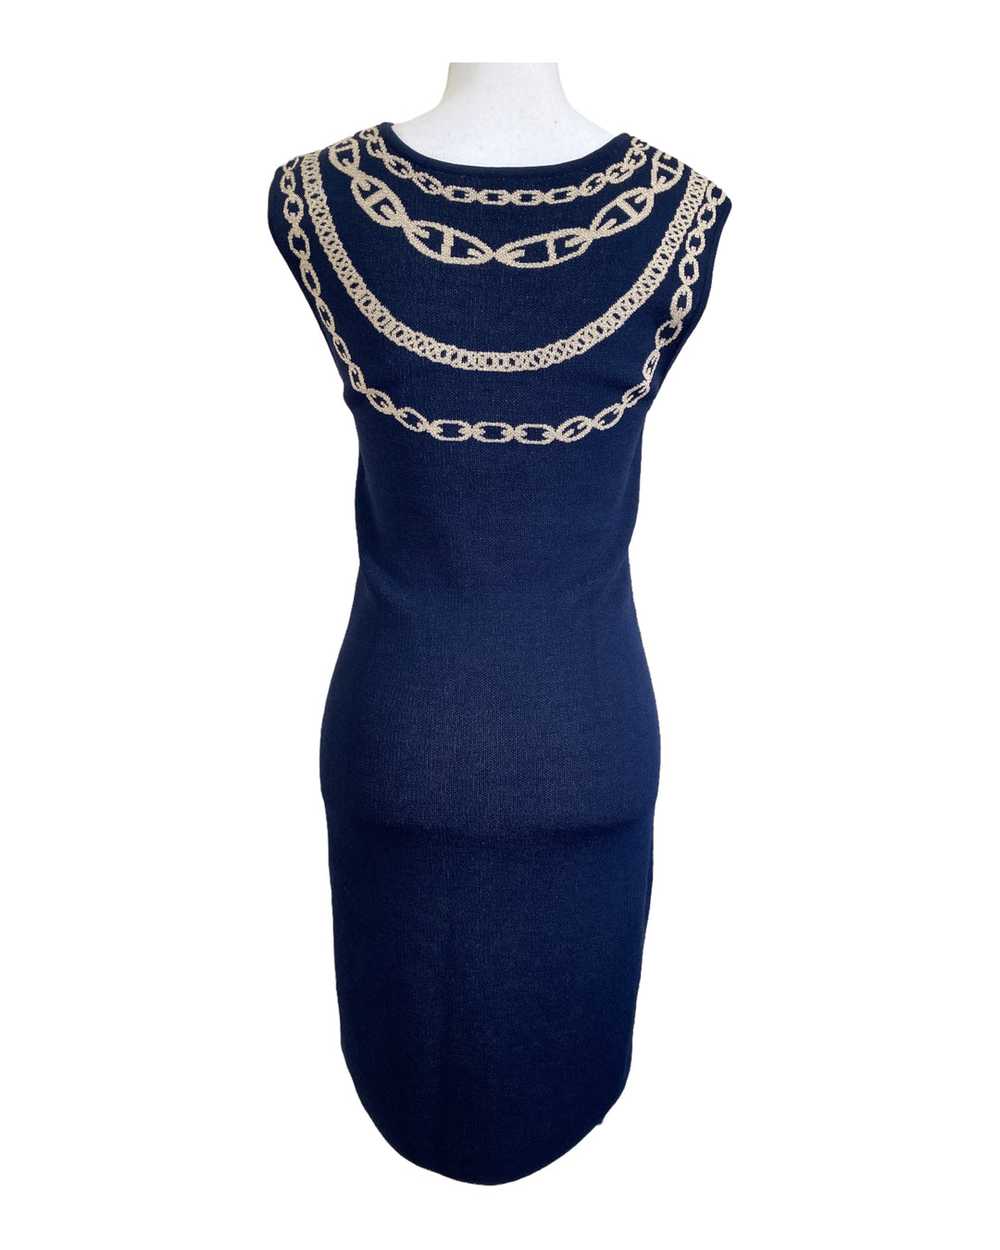 Adrienne Vittadini Navy Knit Dress, S - image 5